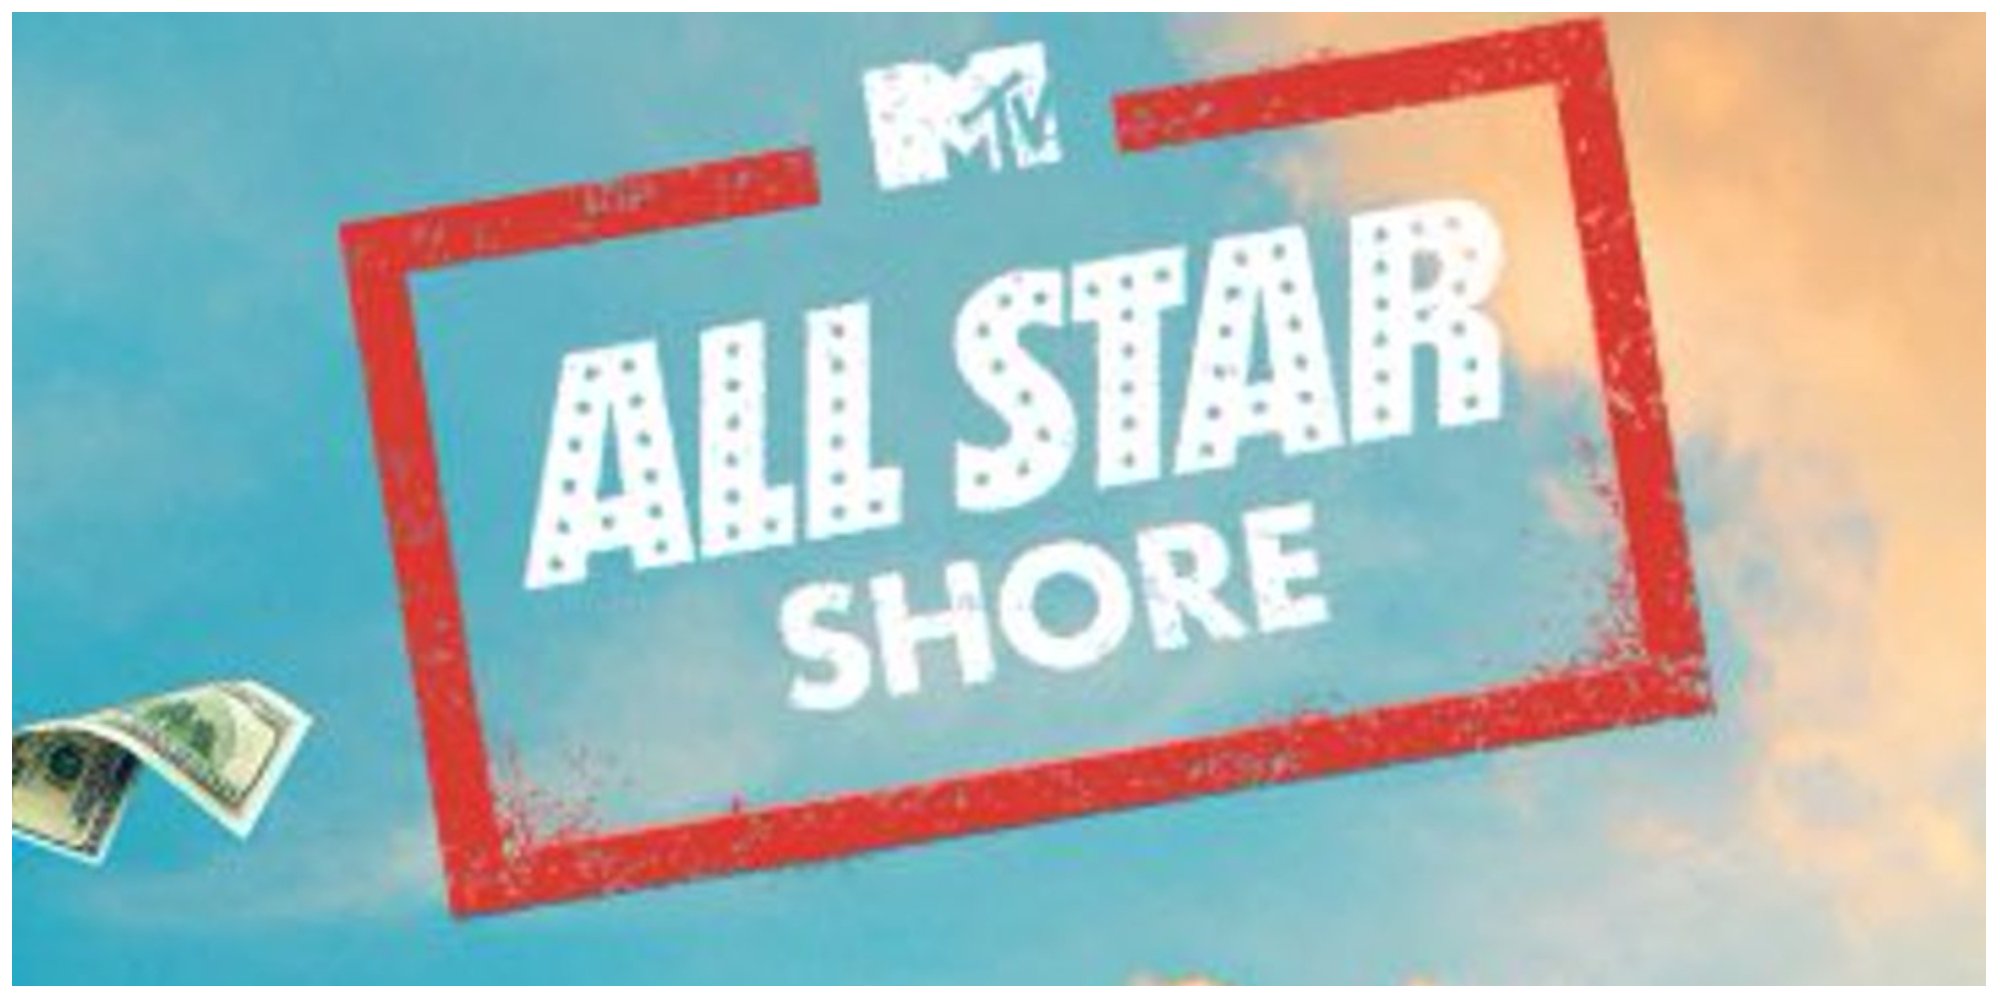 'All Star Shore' logo